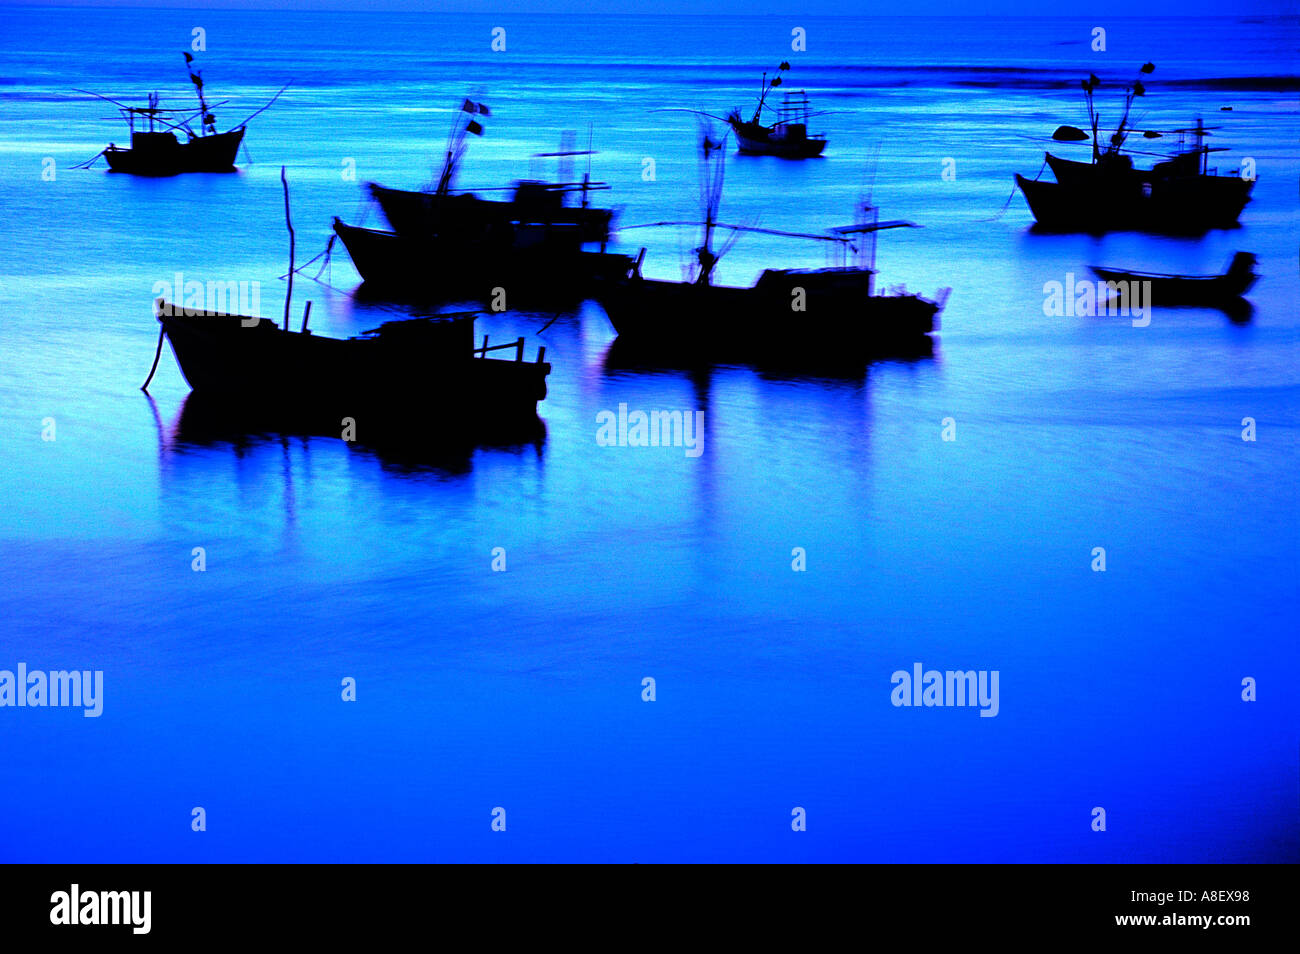 Sri Lanka Ceylan bleu bateaux océan Indien Banque D'Images